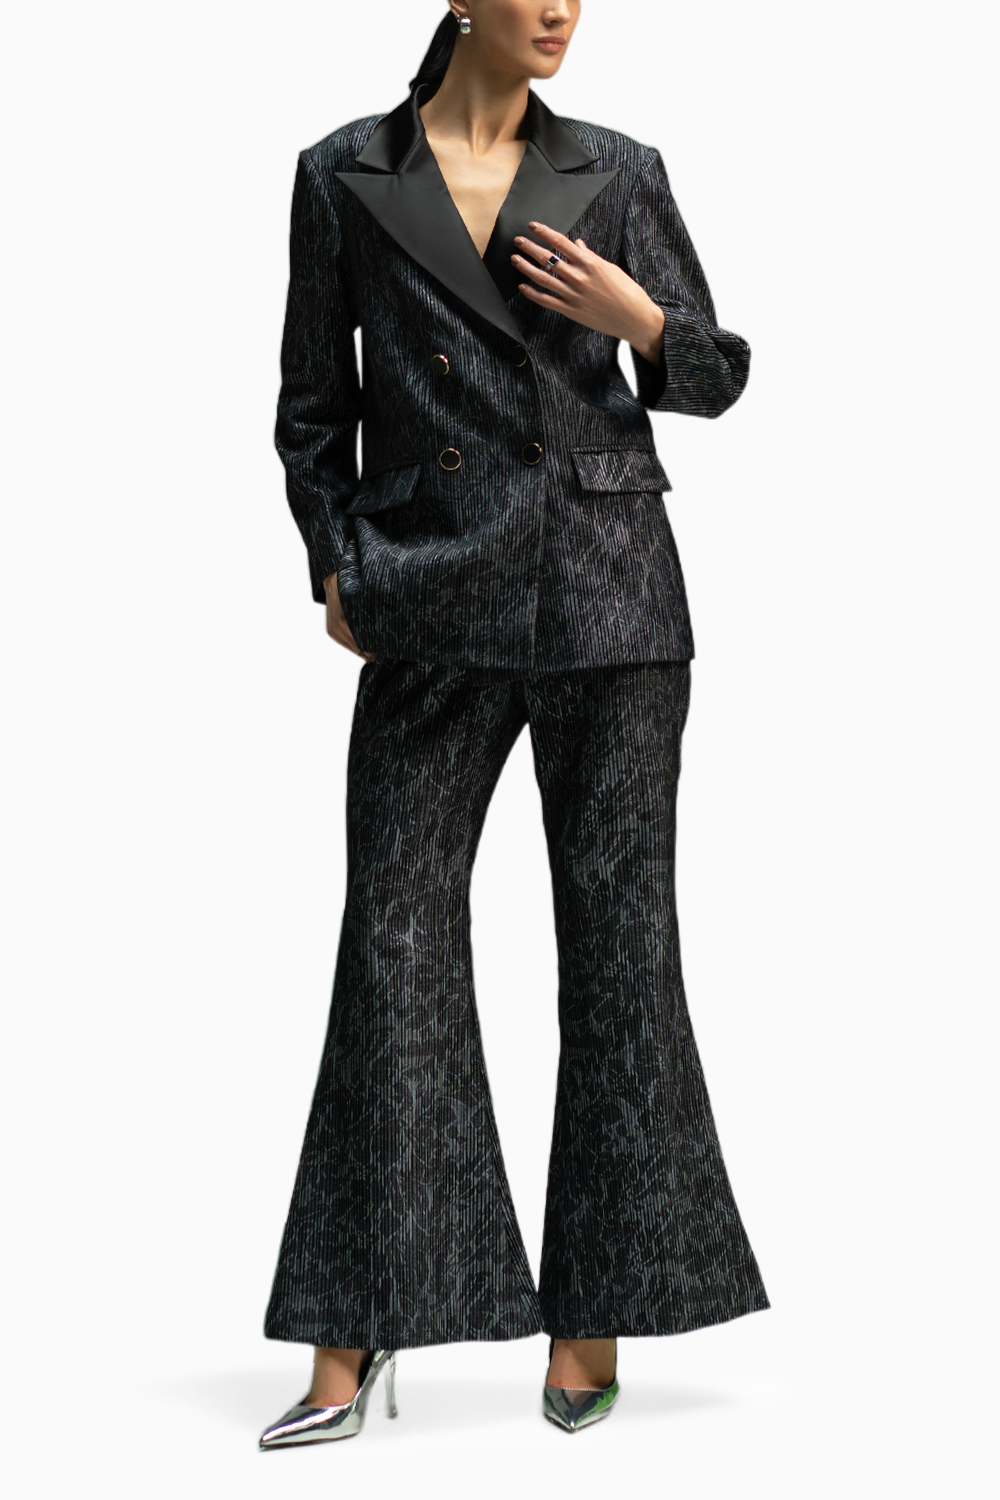 Black & Grey Steel Striper Pant Suit